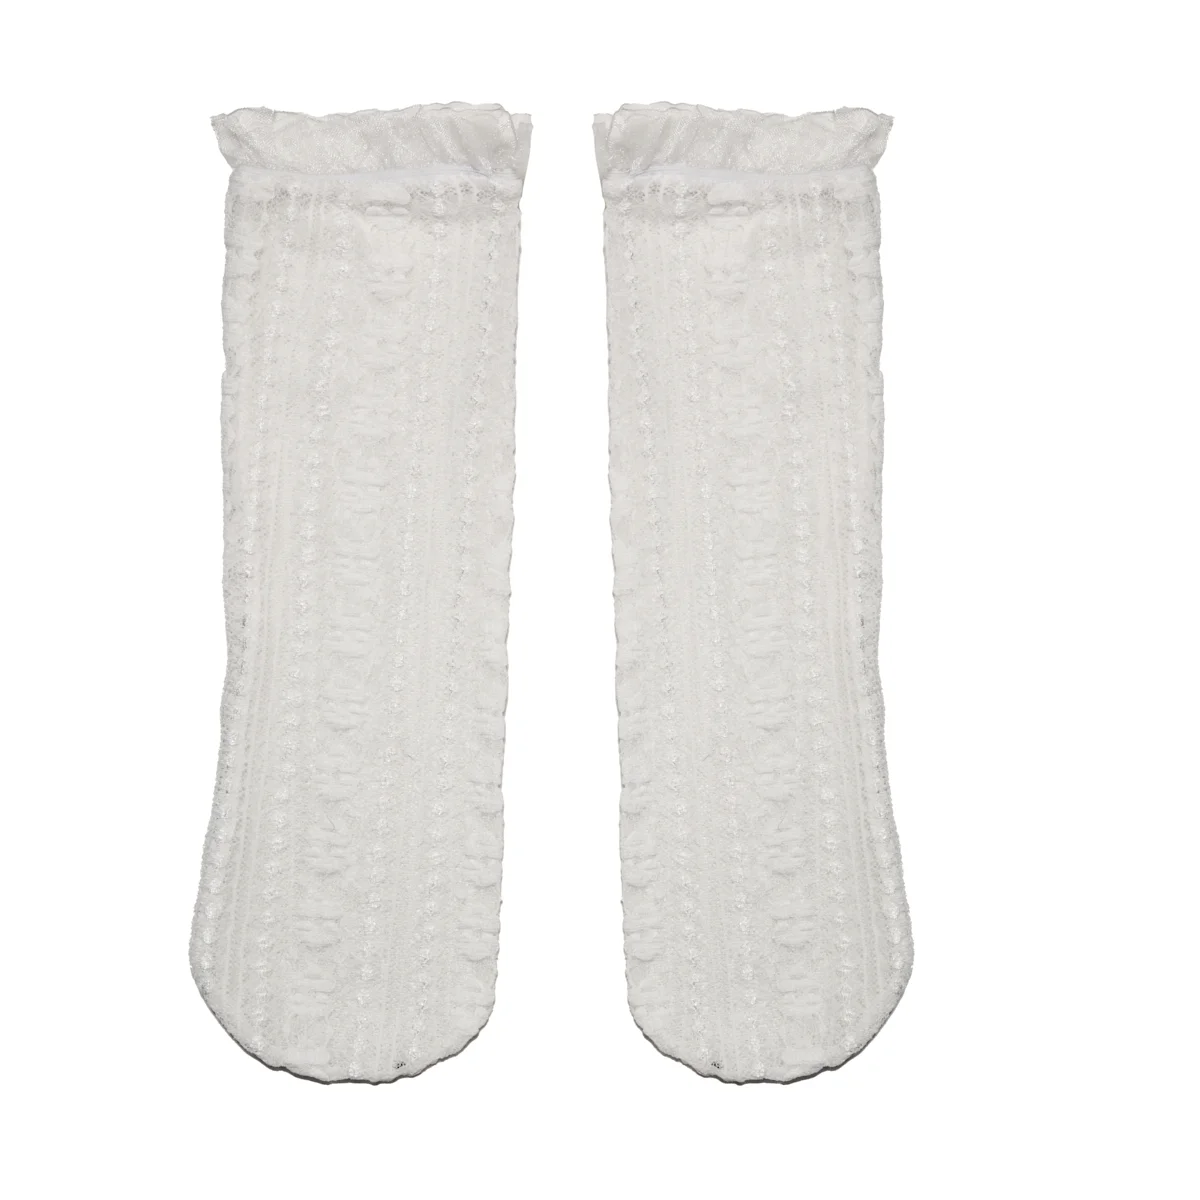 Women's Vogue Socks, size 38 (White)